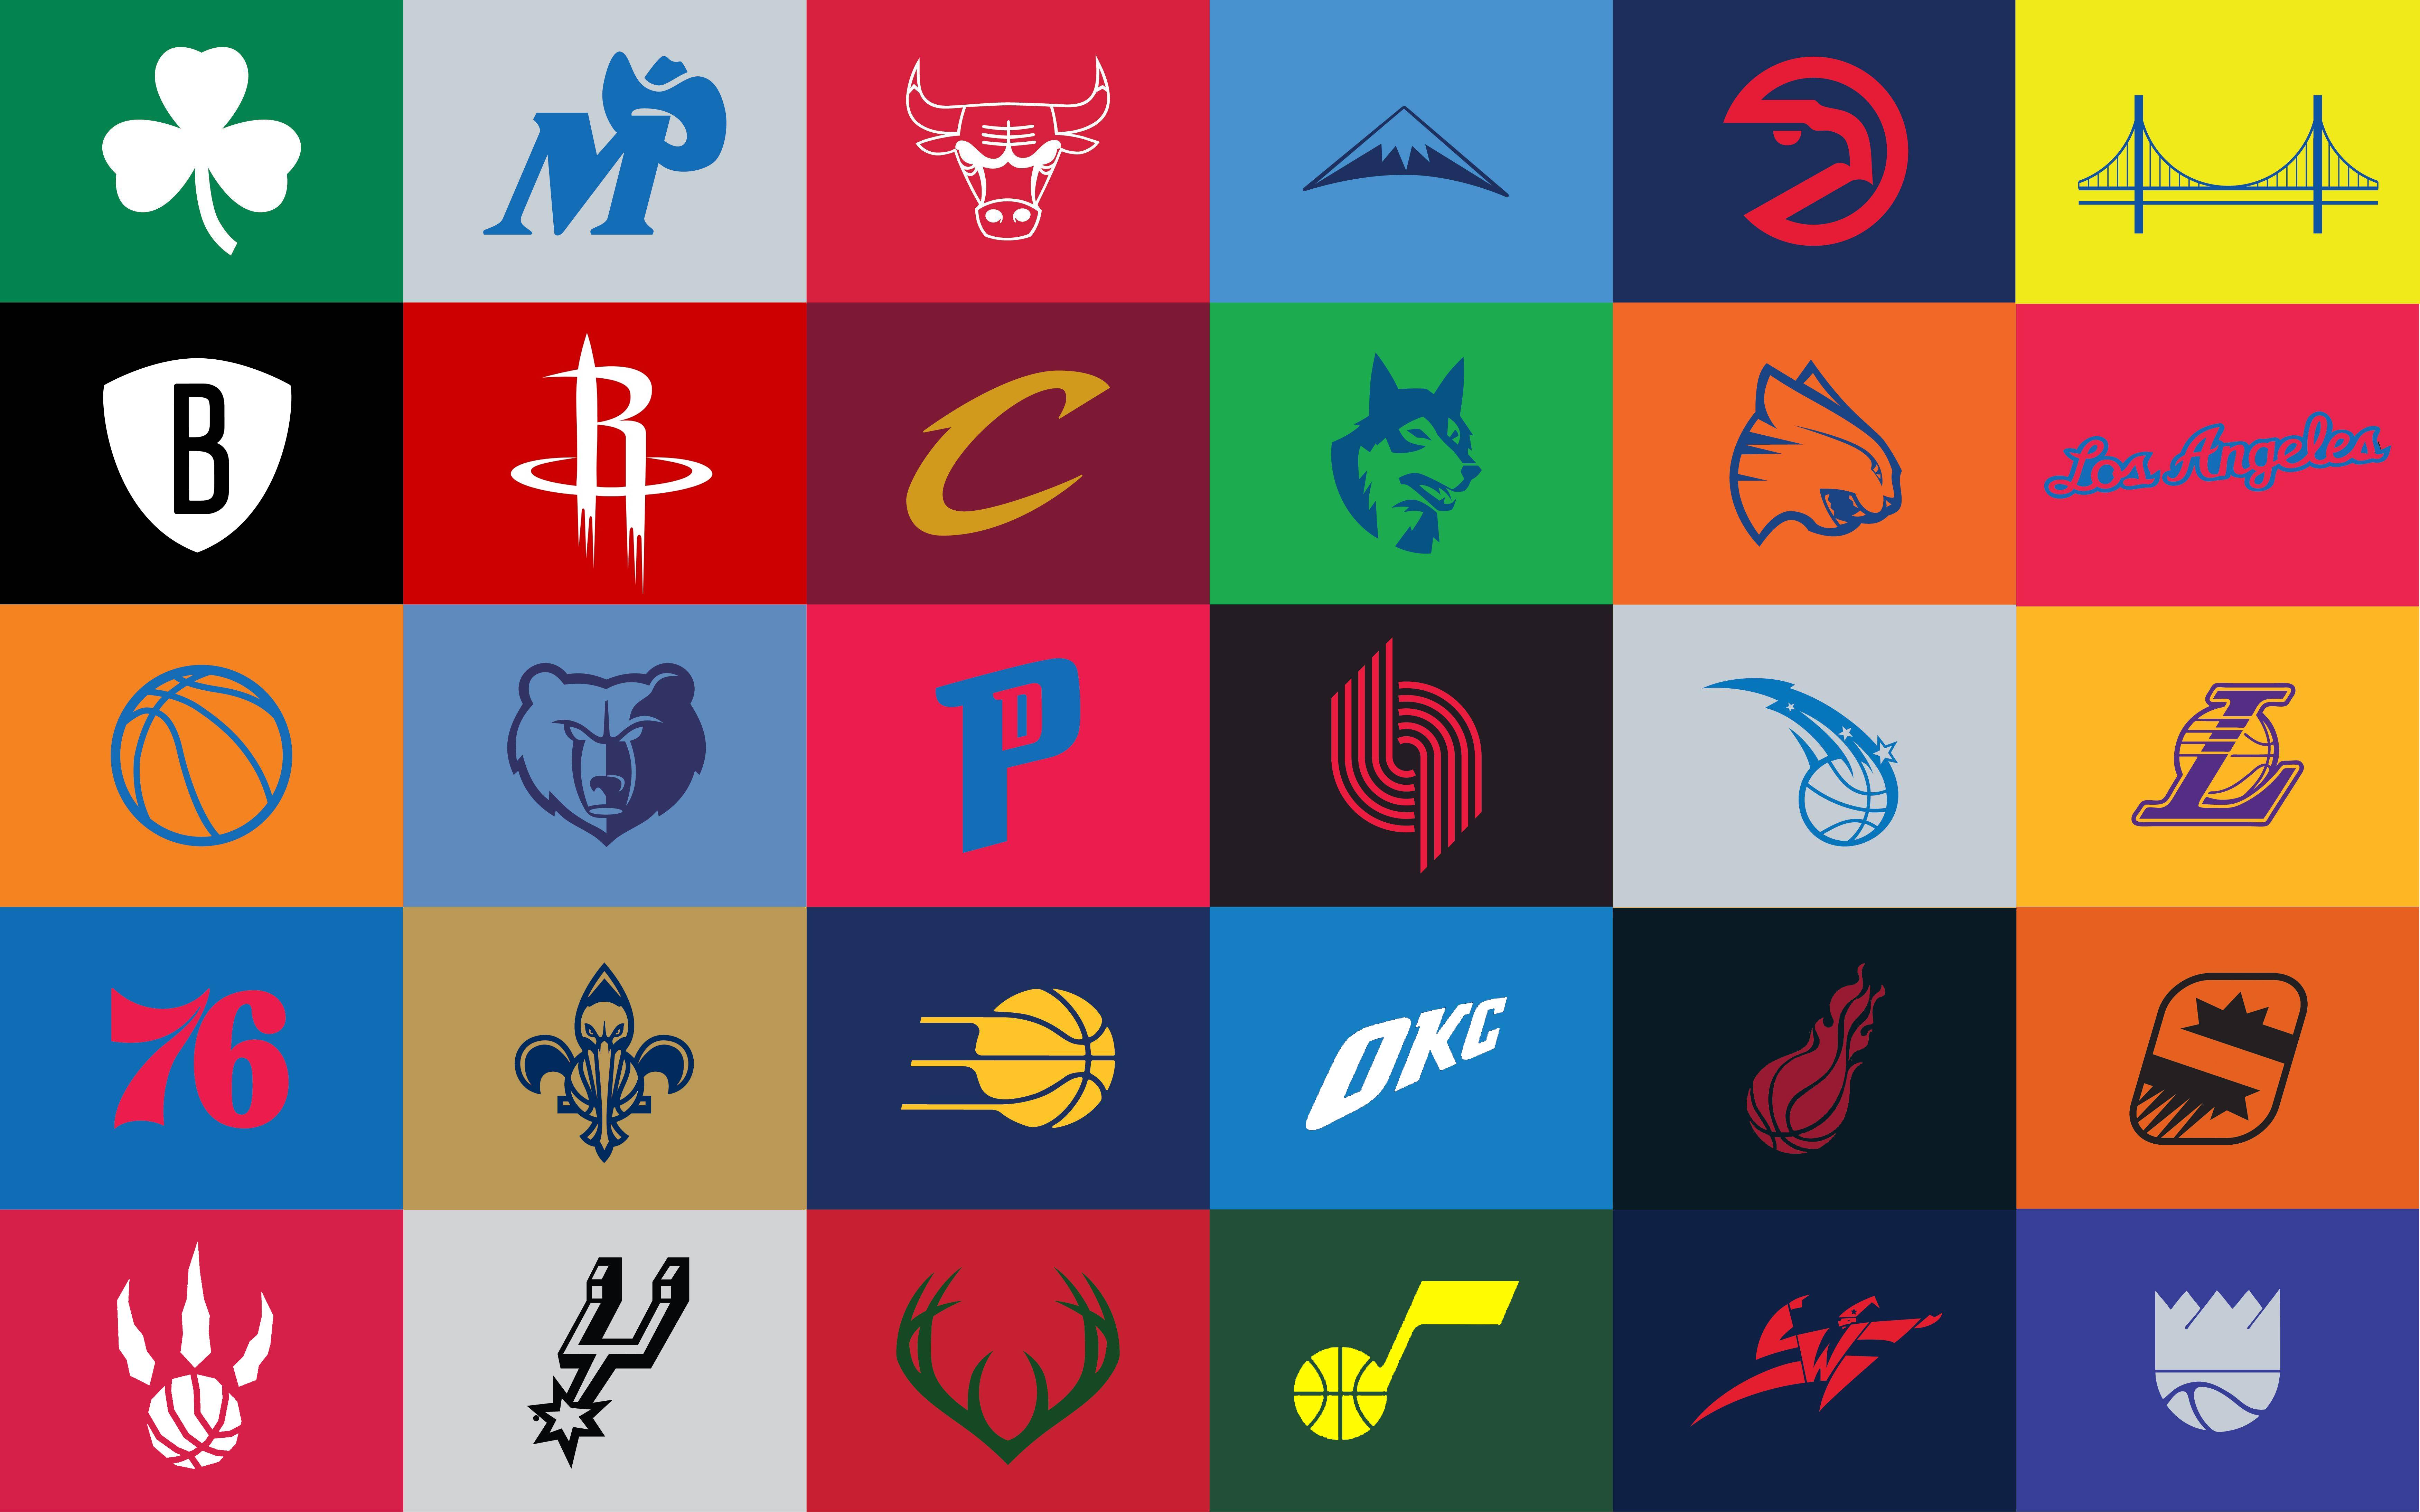 I made a few adjustments to the minimalist NBA logos wallpaper